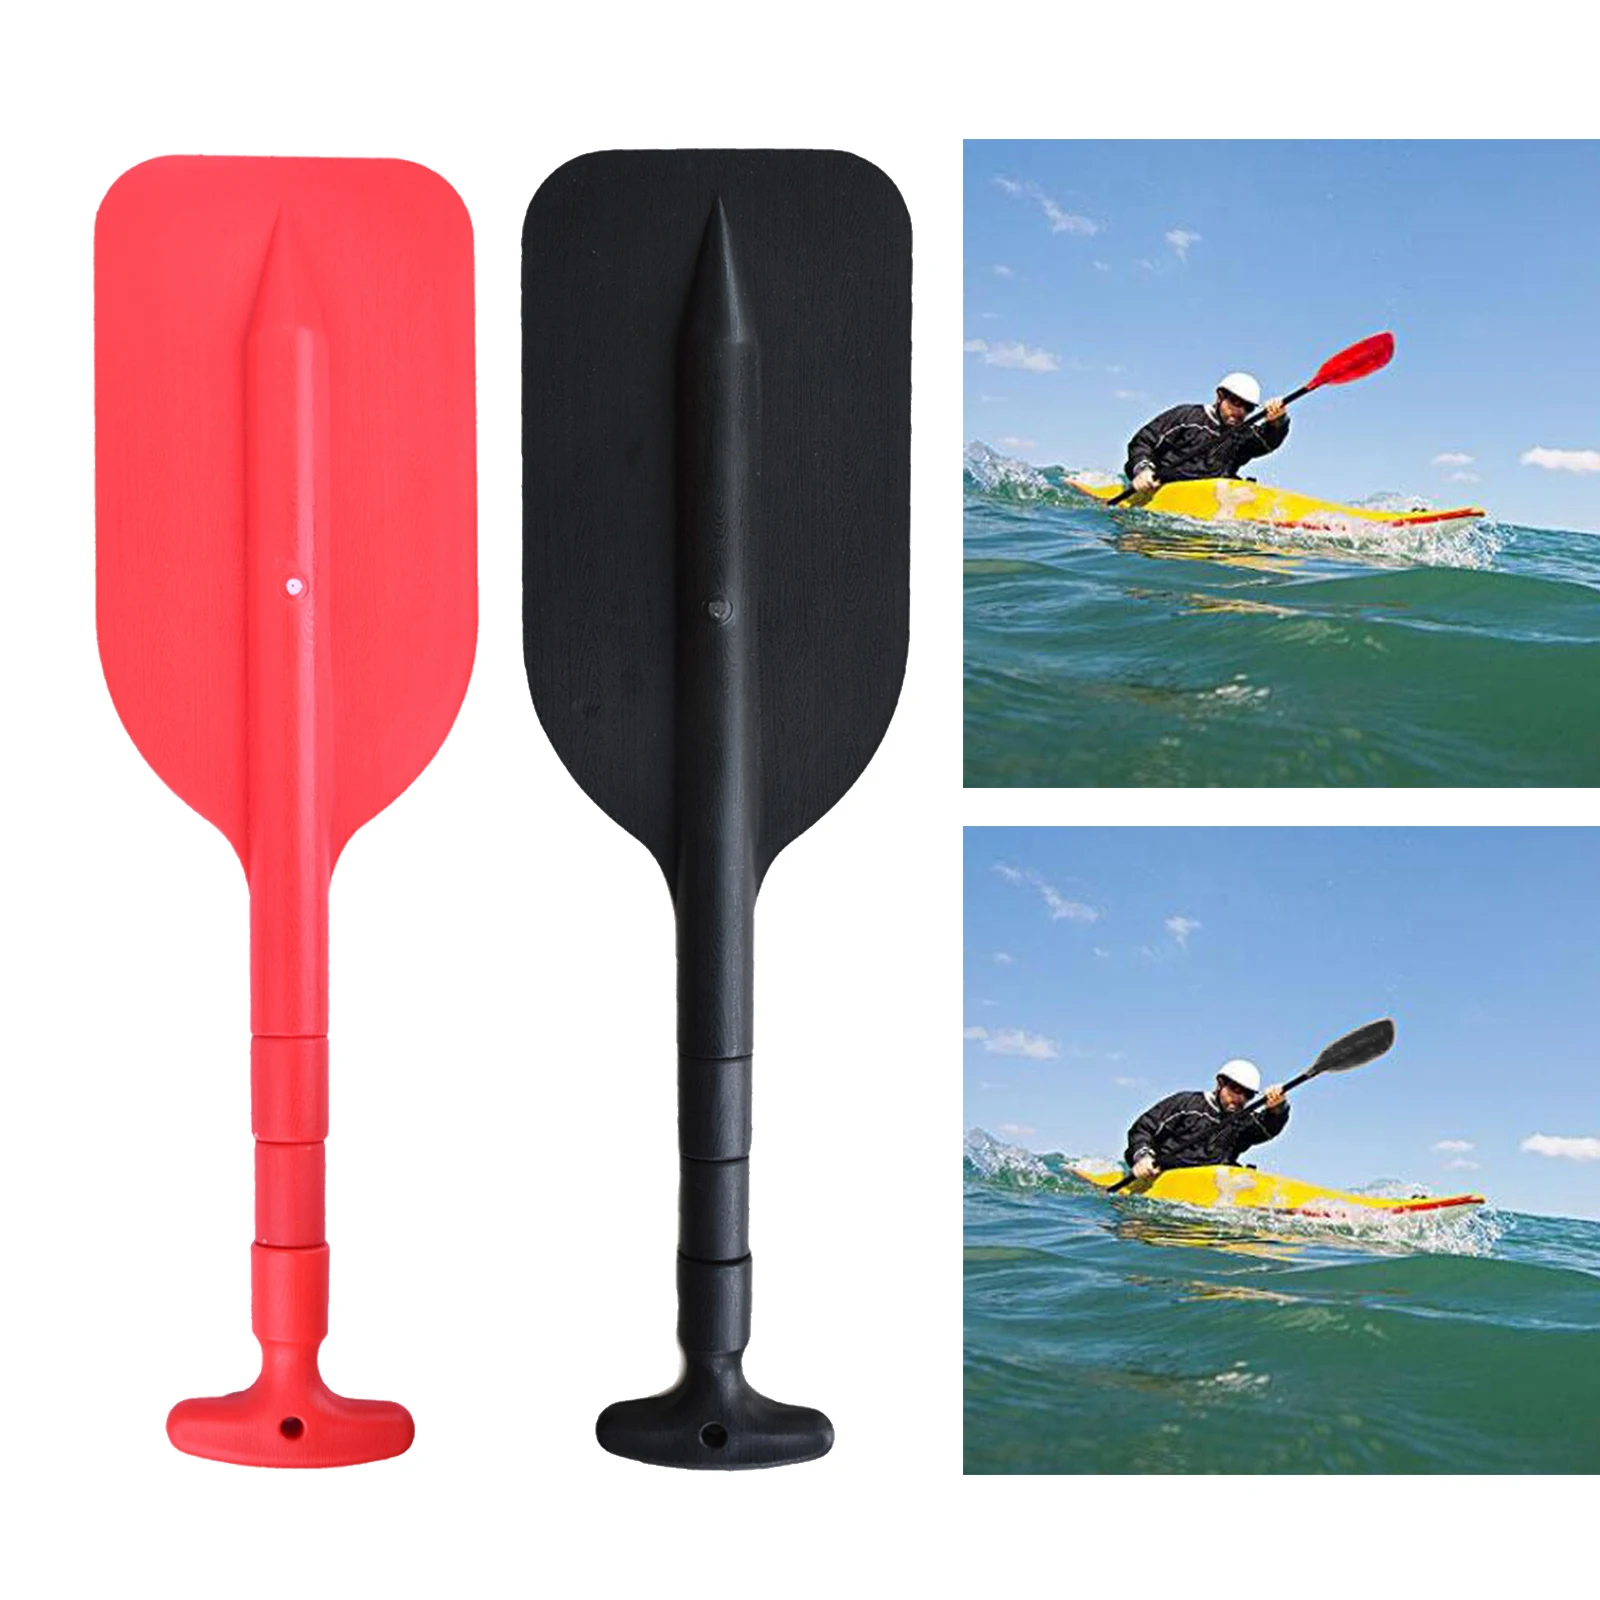 Adjustable MIni Kayak Paddle Oar Canoe Rafting Safety Boat Accessories